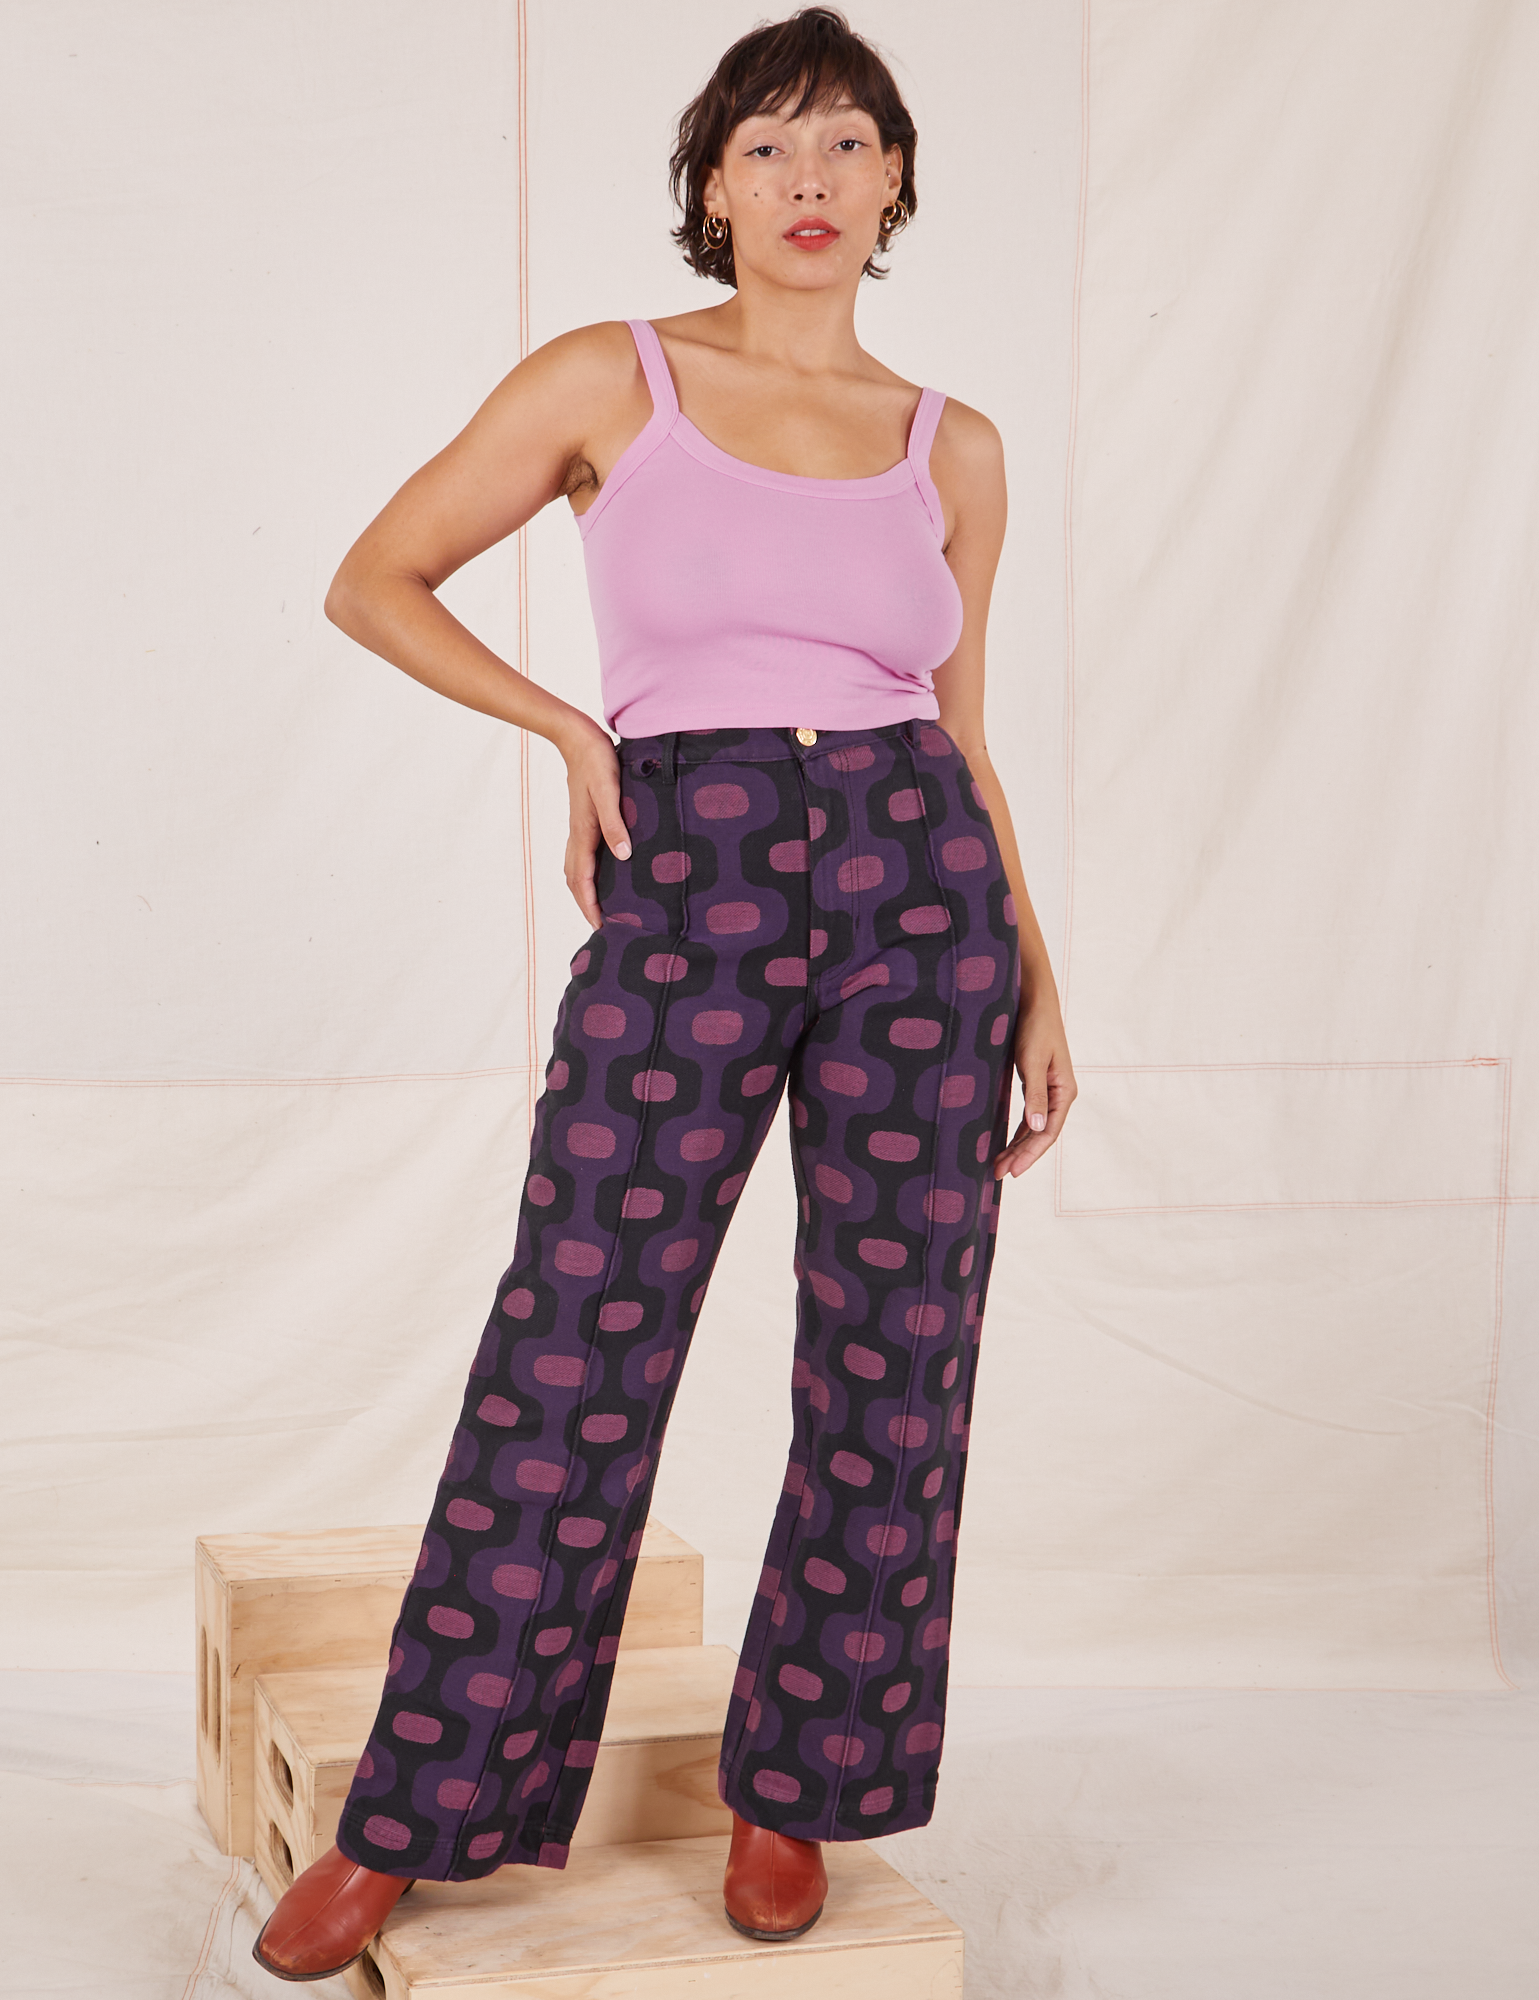 Tiara is wearing Western Pants in Purple Tile Jacquard and bubblegum pink Cami